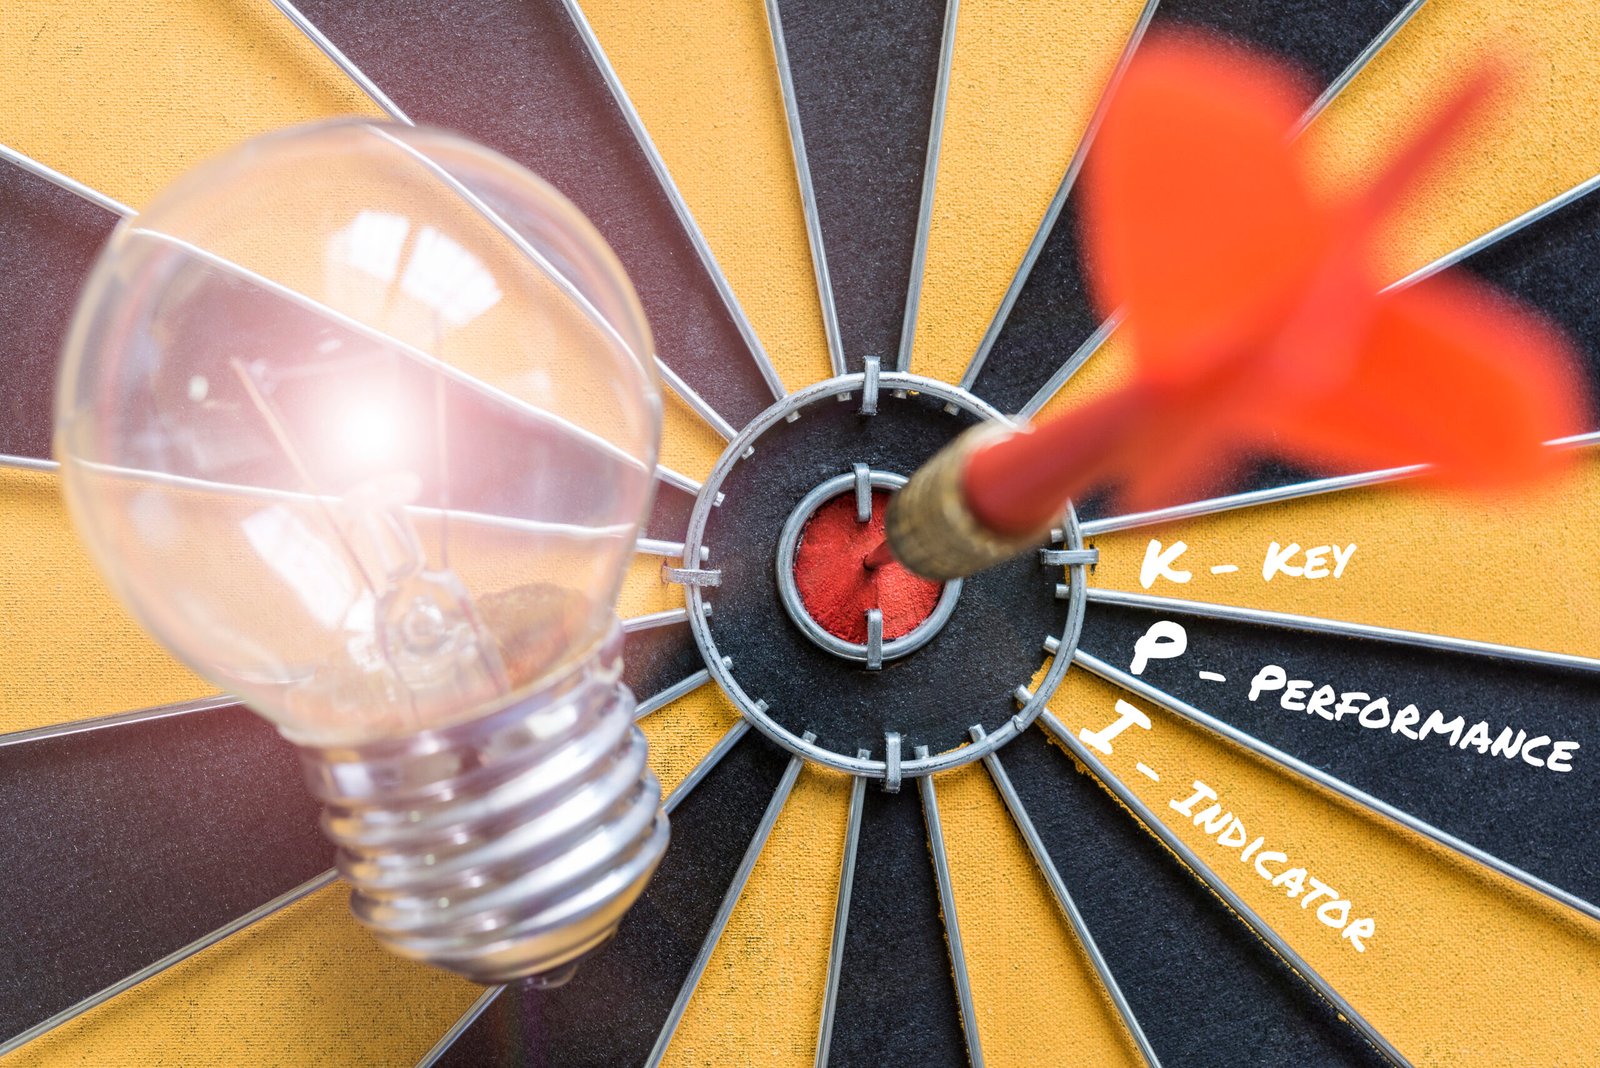 KPI key performance indicator with idea lamp target fonte: freepik